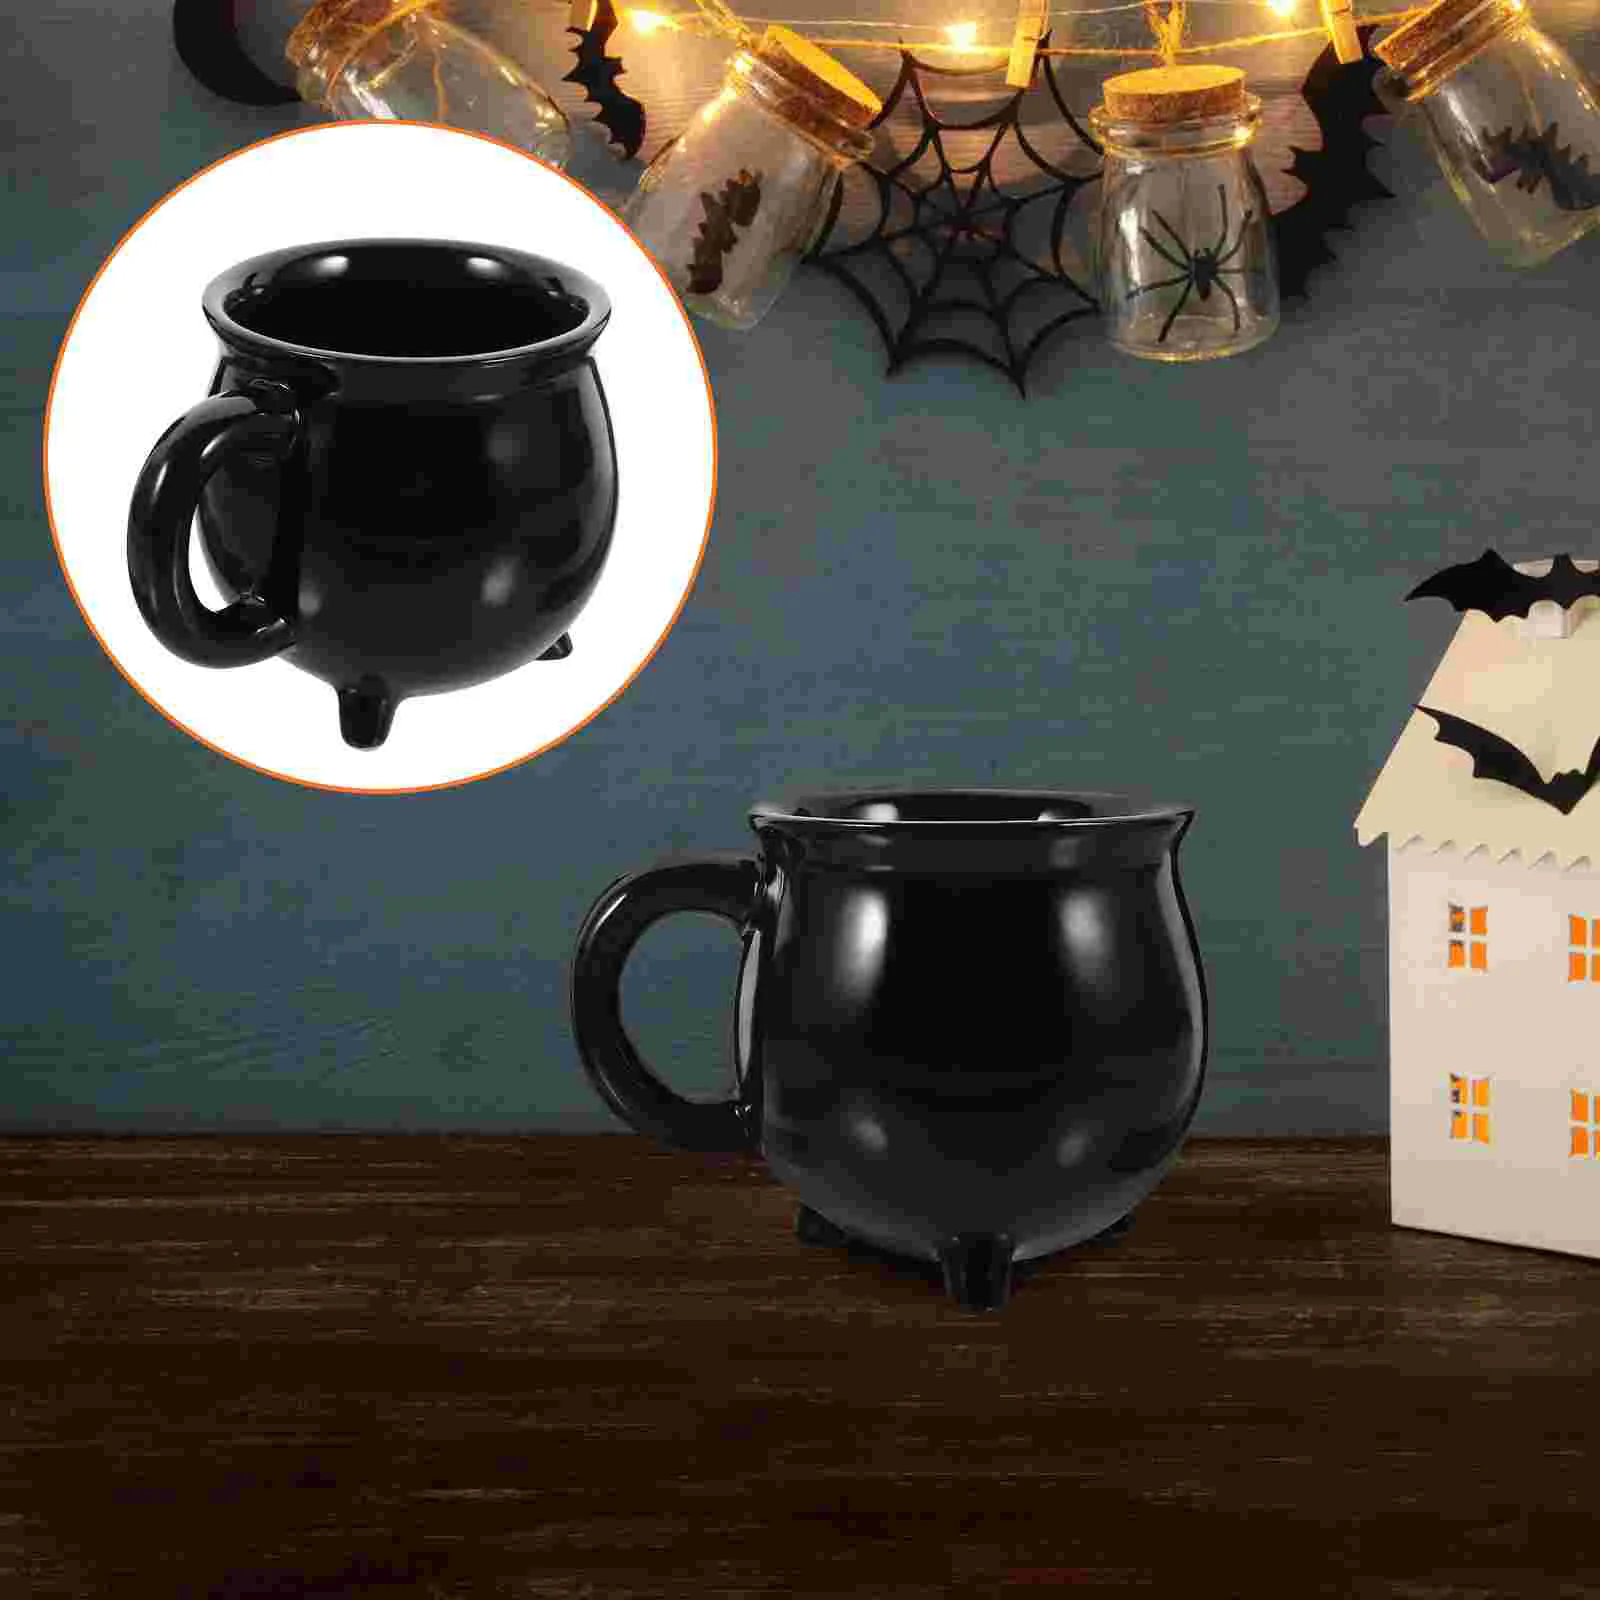 

Witch Cup Ceramic Cauldron Coffee Mug Black Drinking Glasses Ceramics Drinks Serving Mugs